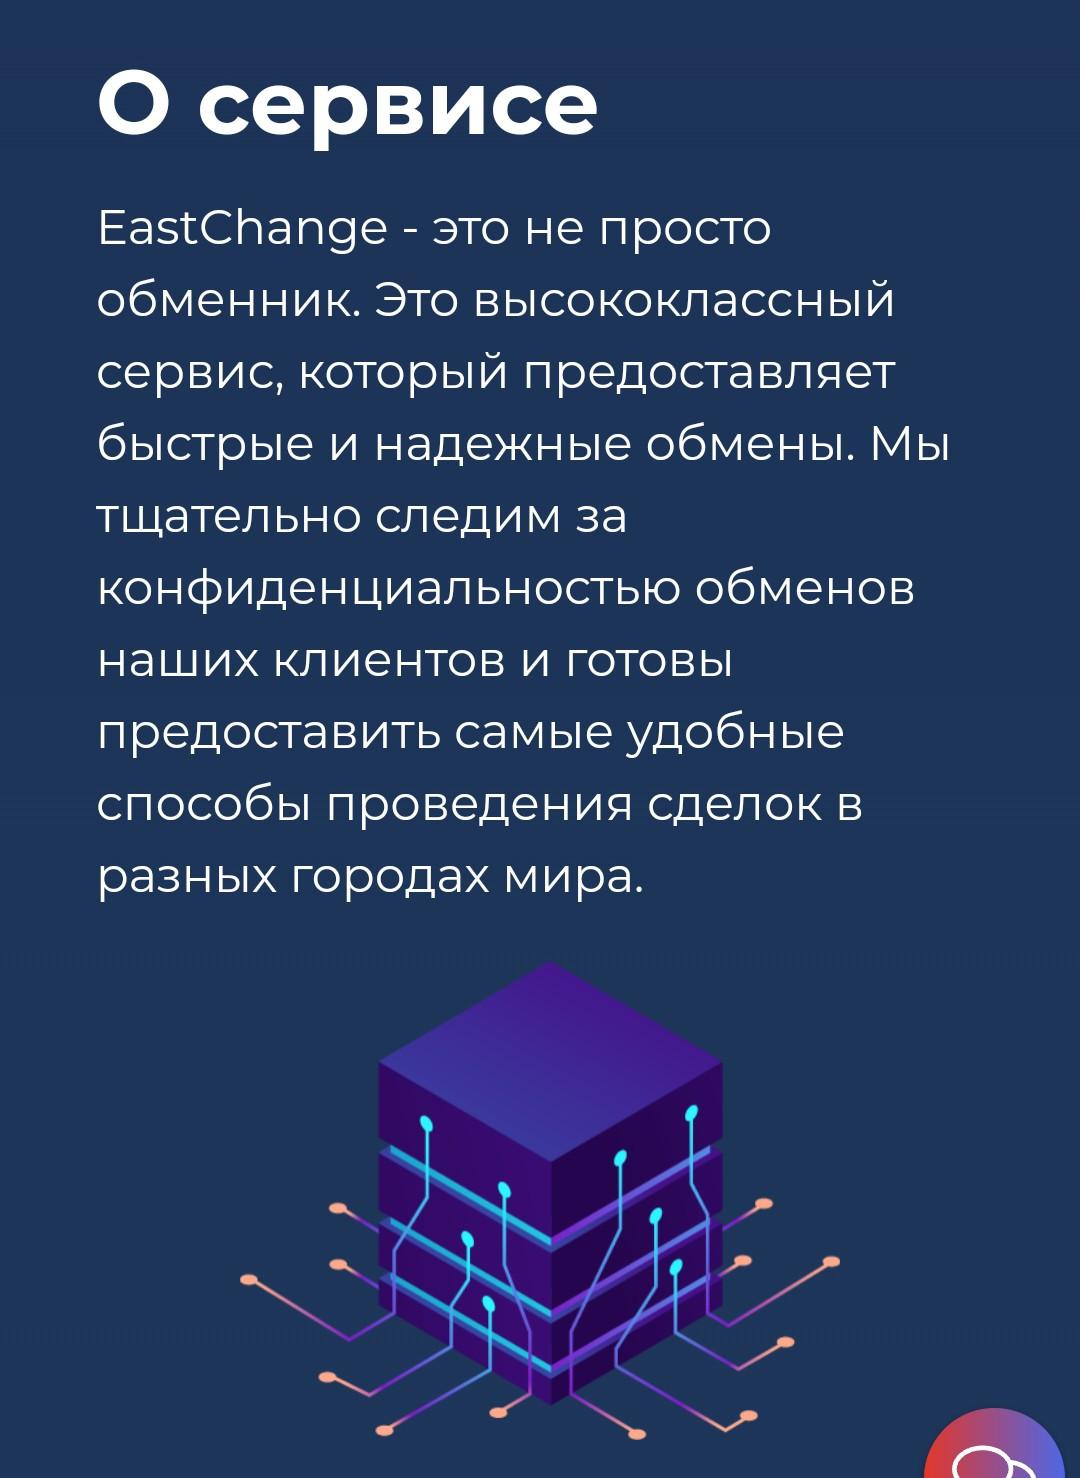 East change сайт